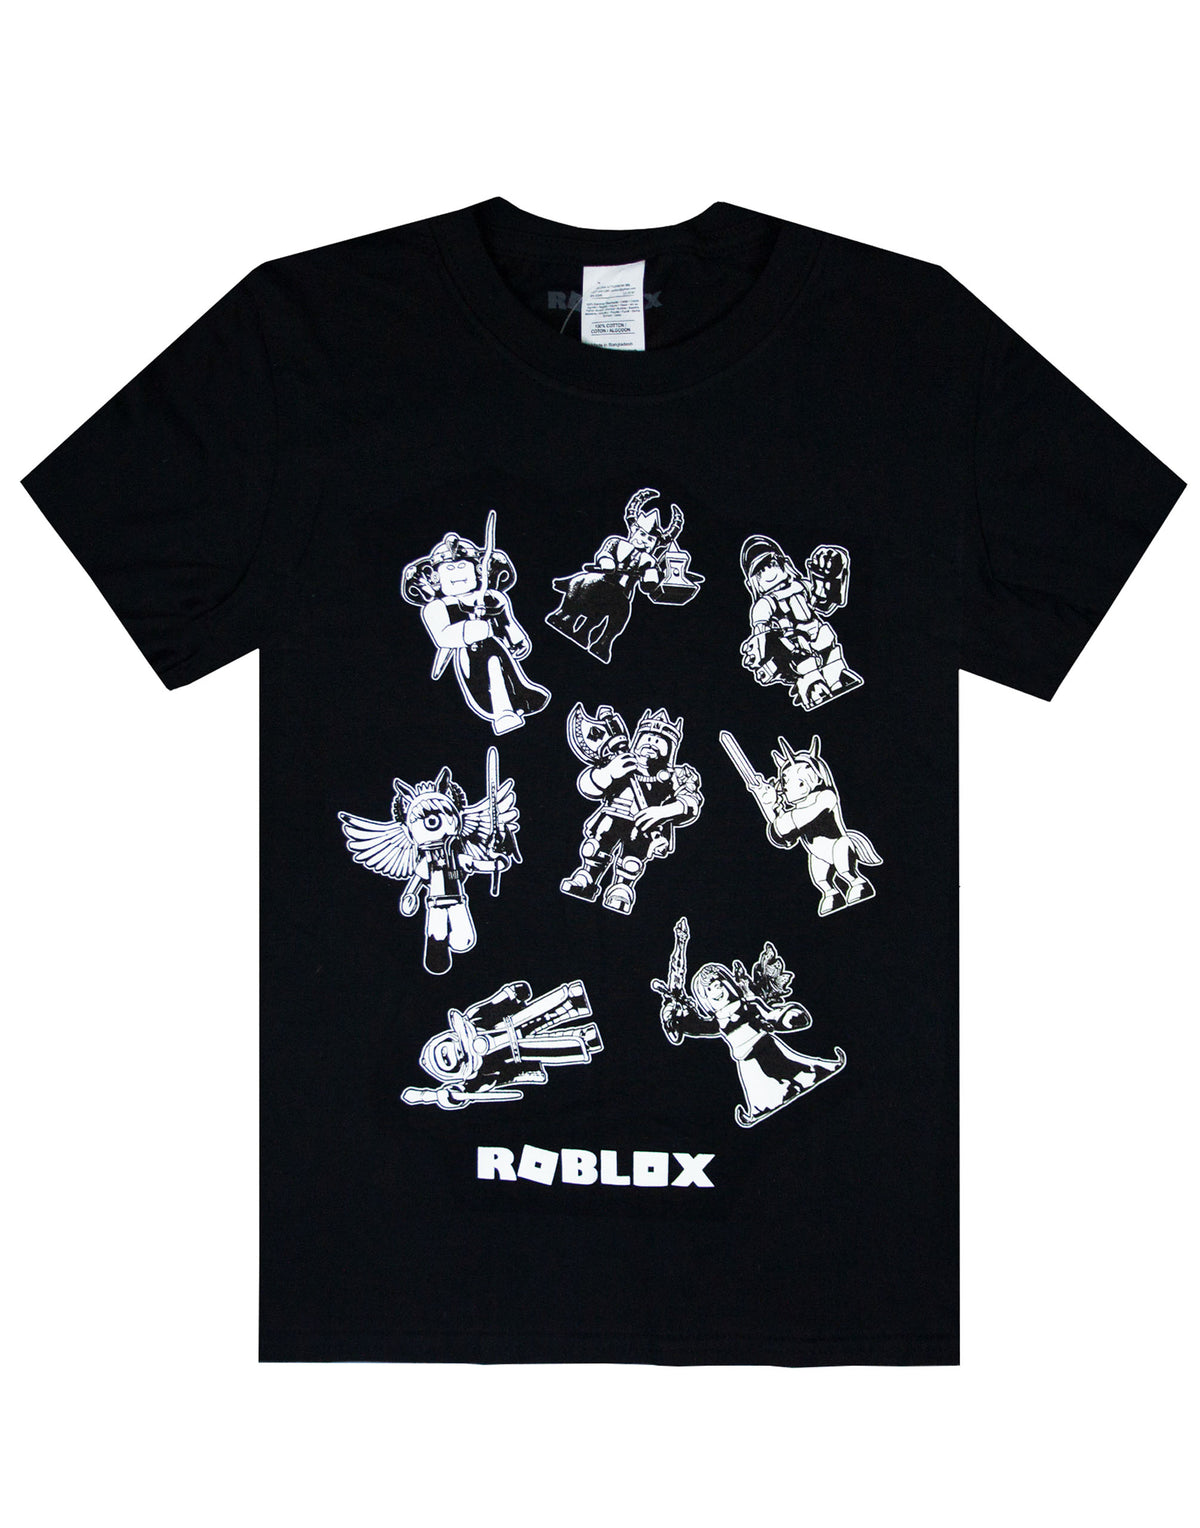 Roblox Characters In Space Kid S Black T Shirt Short Sleeve Gamer S Te Vanilla Underground - t shirt roblox nirvana